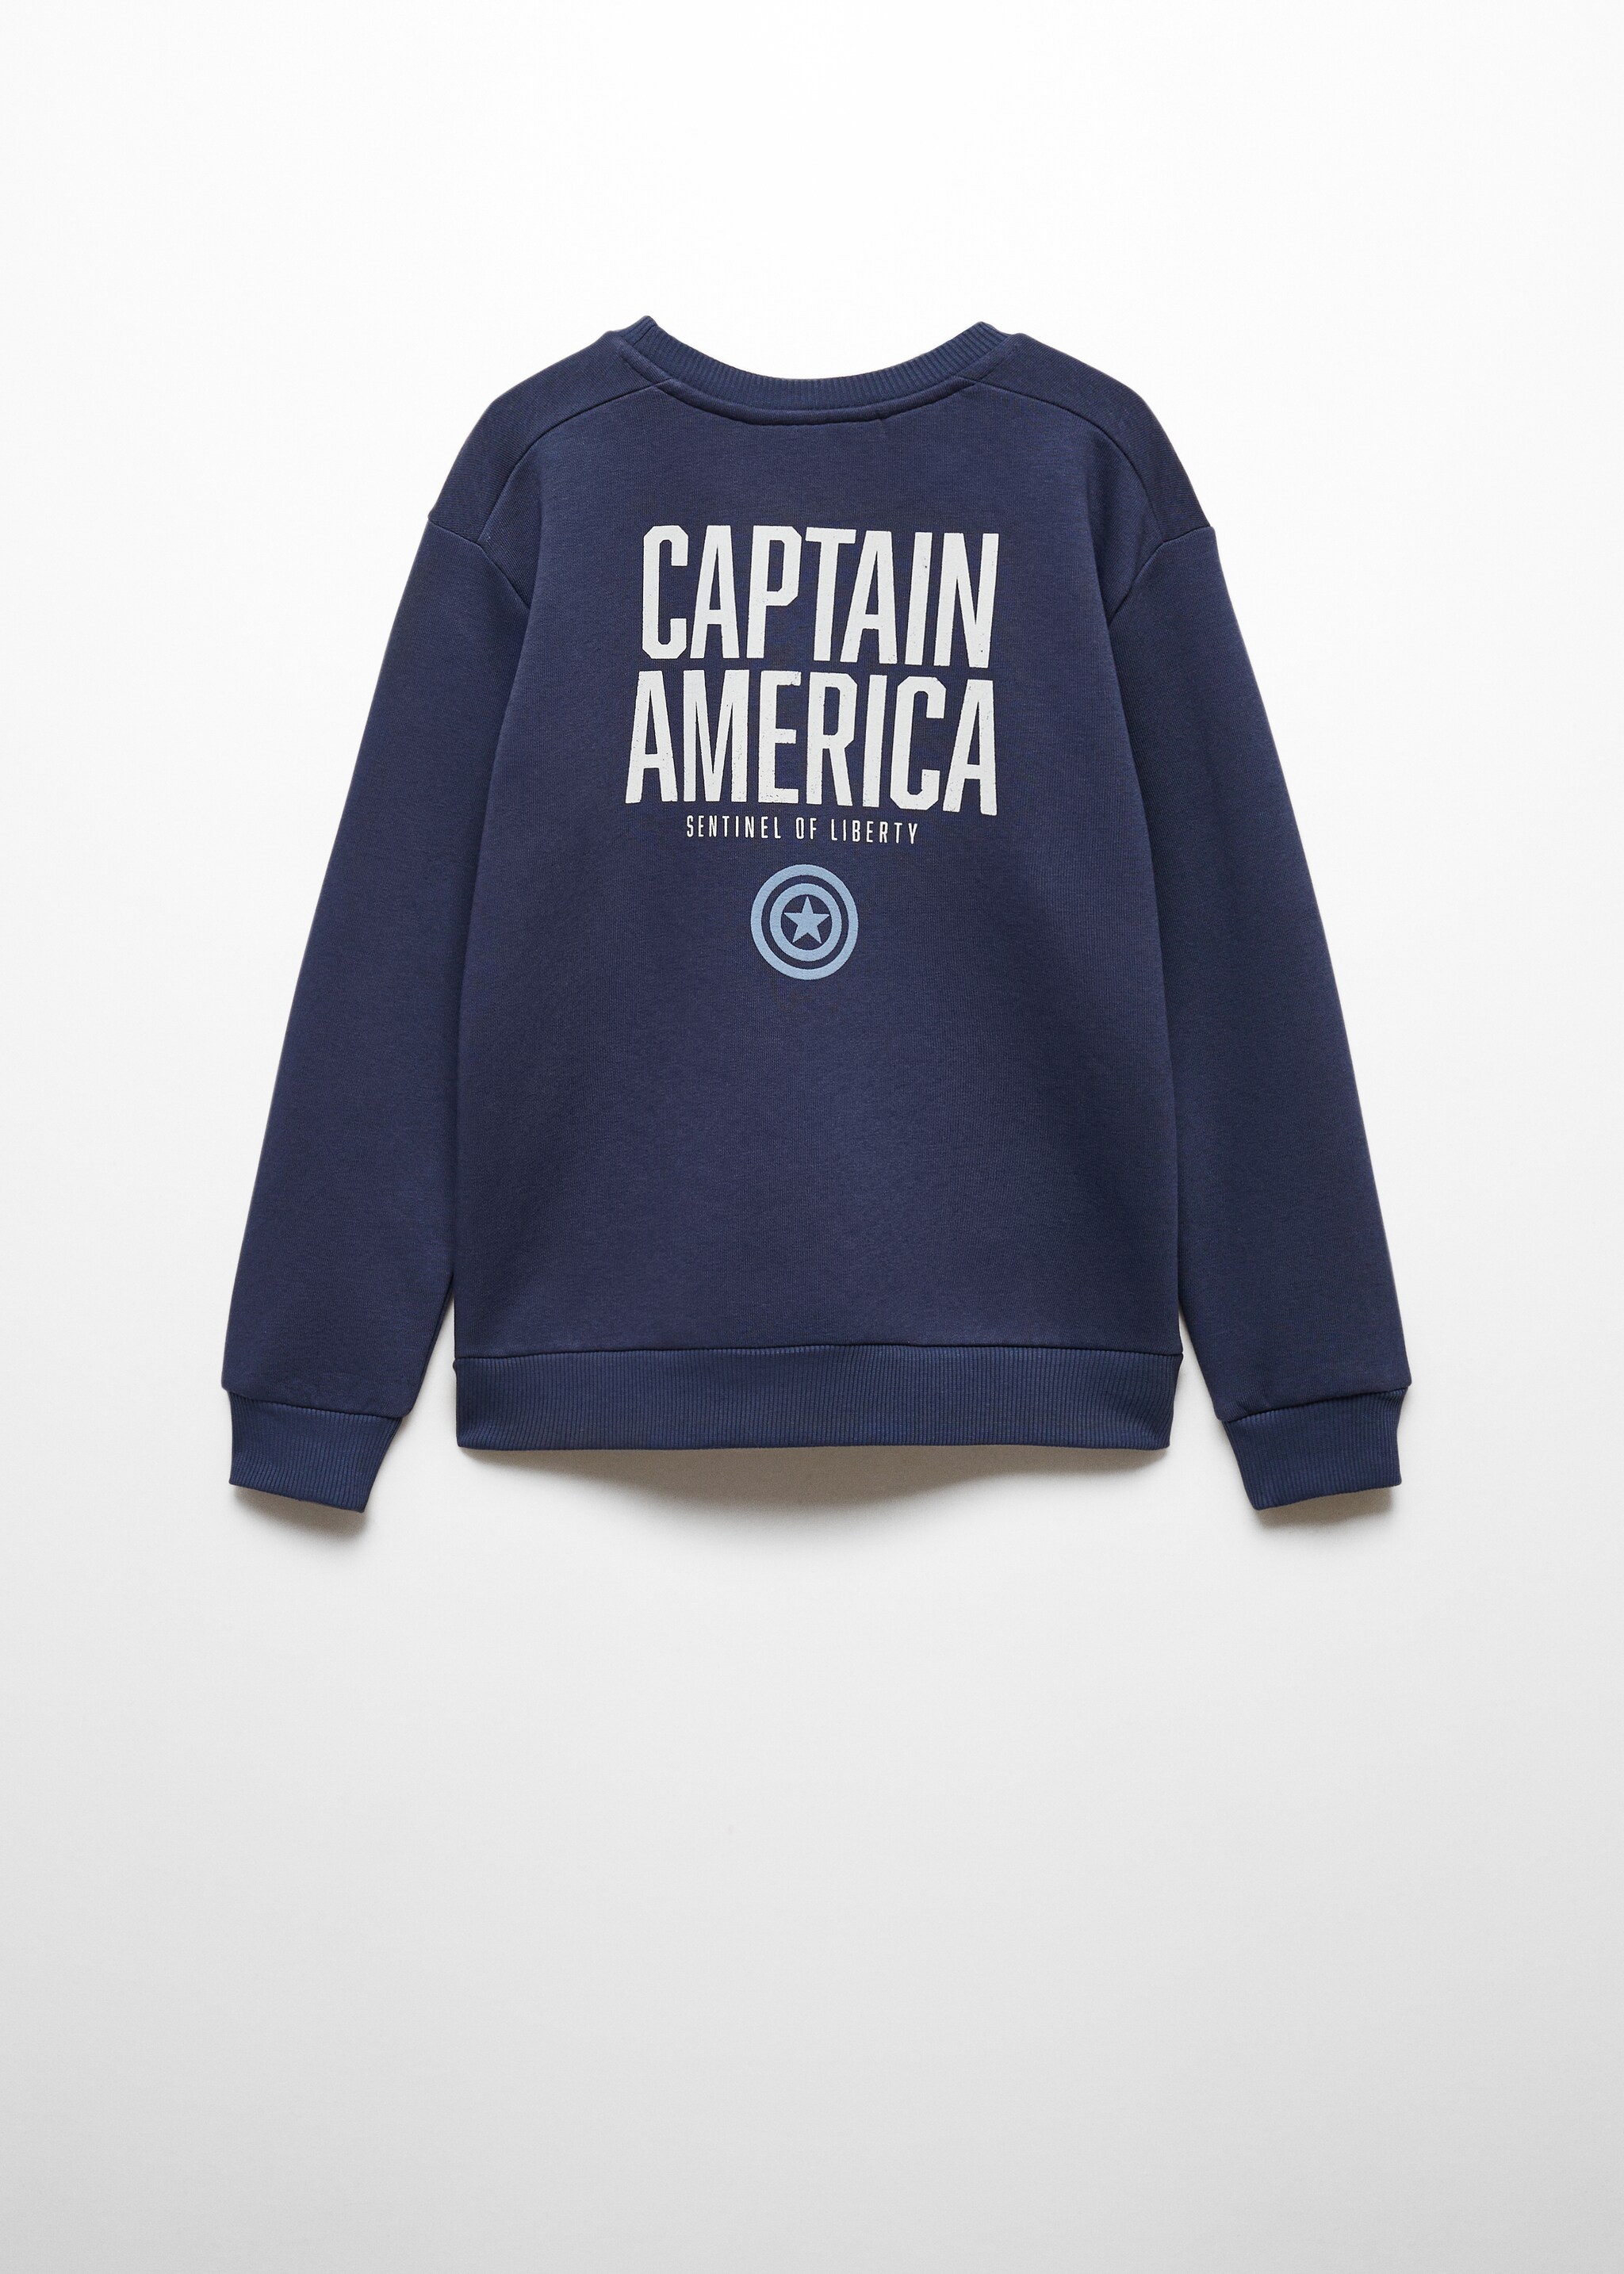 Captain America Sweatshirt - Reverse of the article